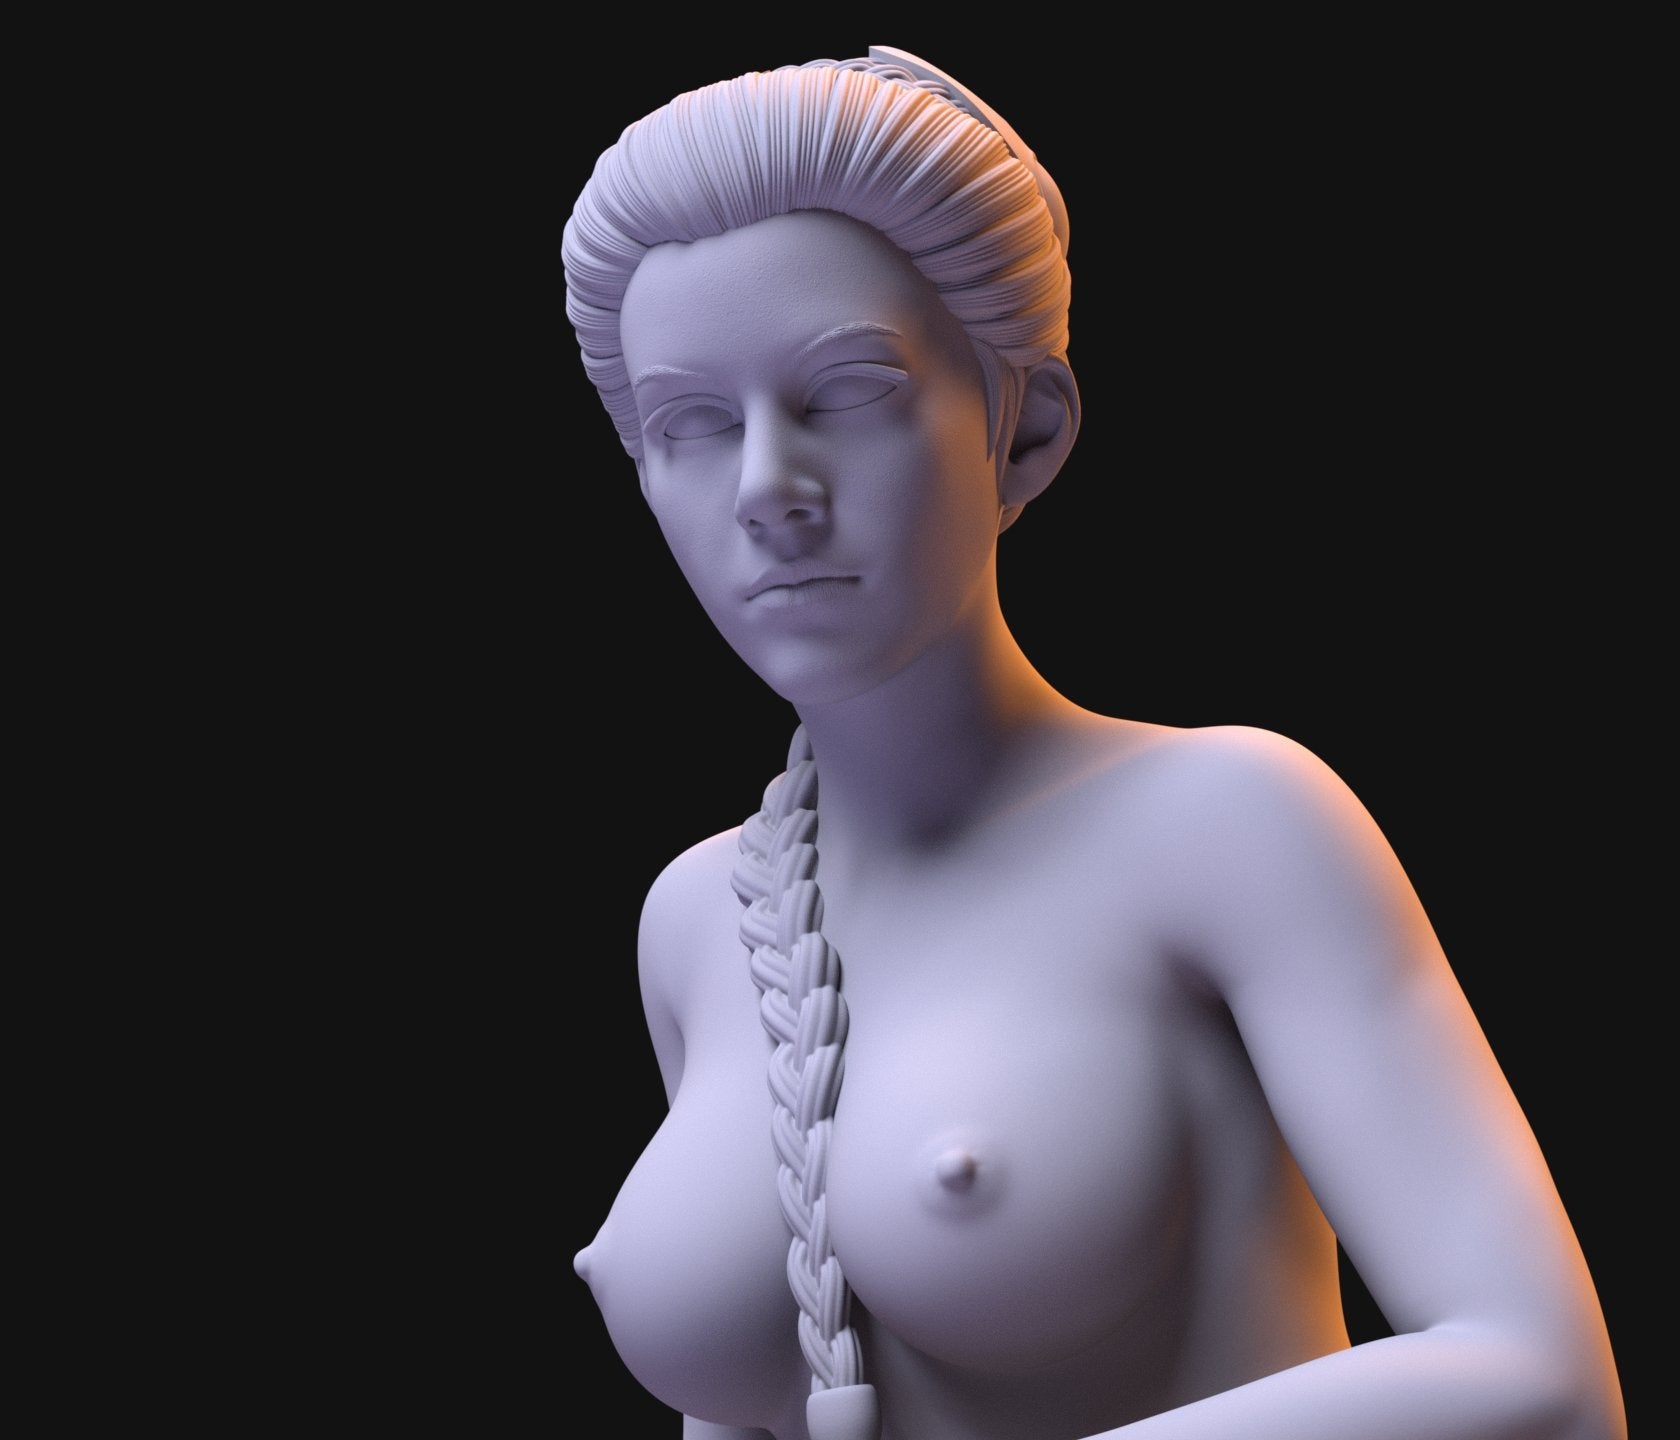 Slave Leia NSFW 3D Printed Figurine Fanart Unpainted Miniature Collectibles